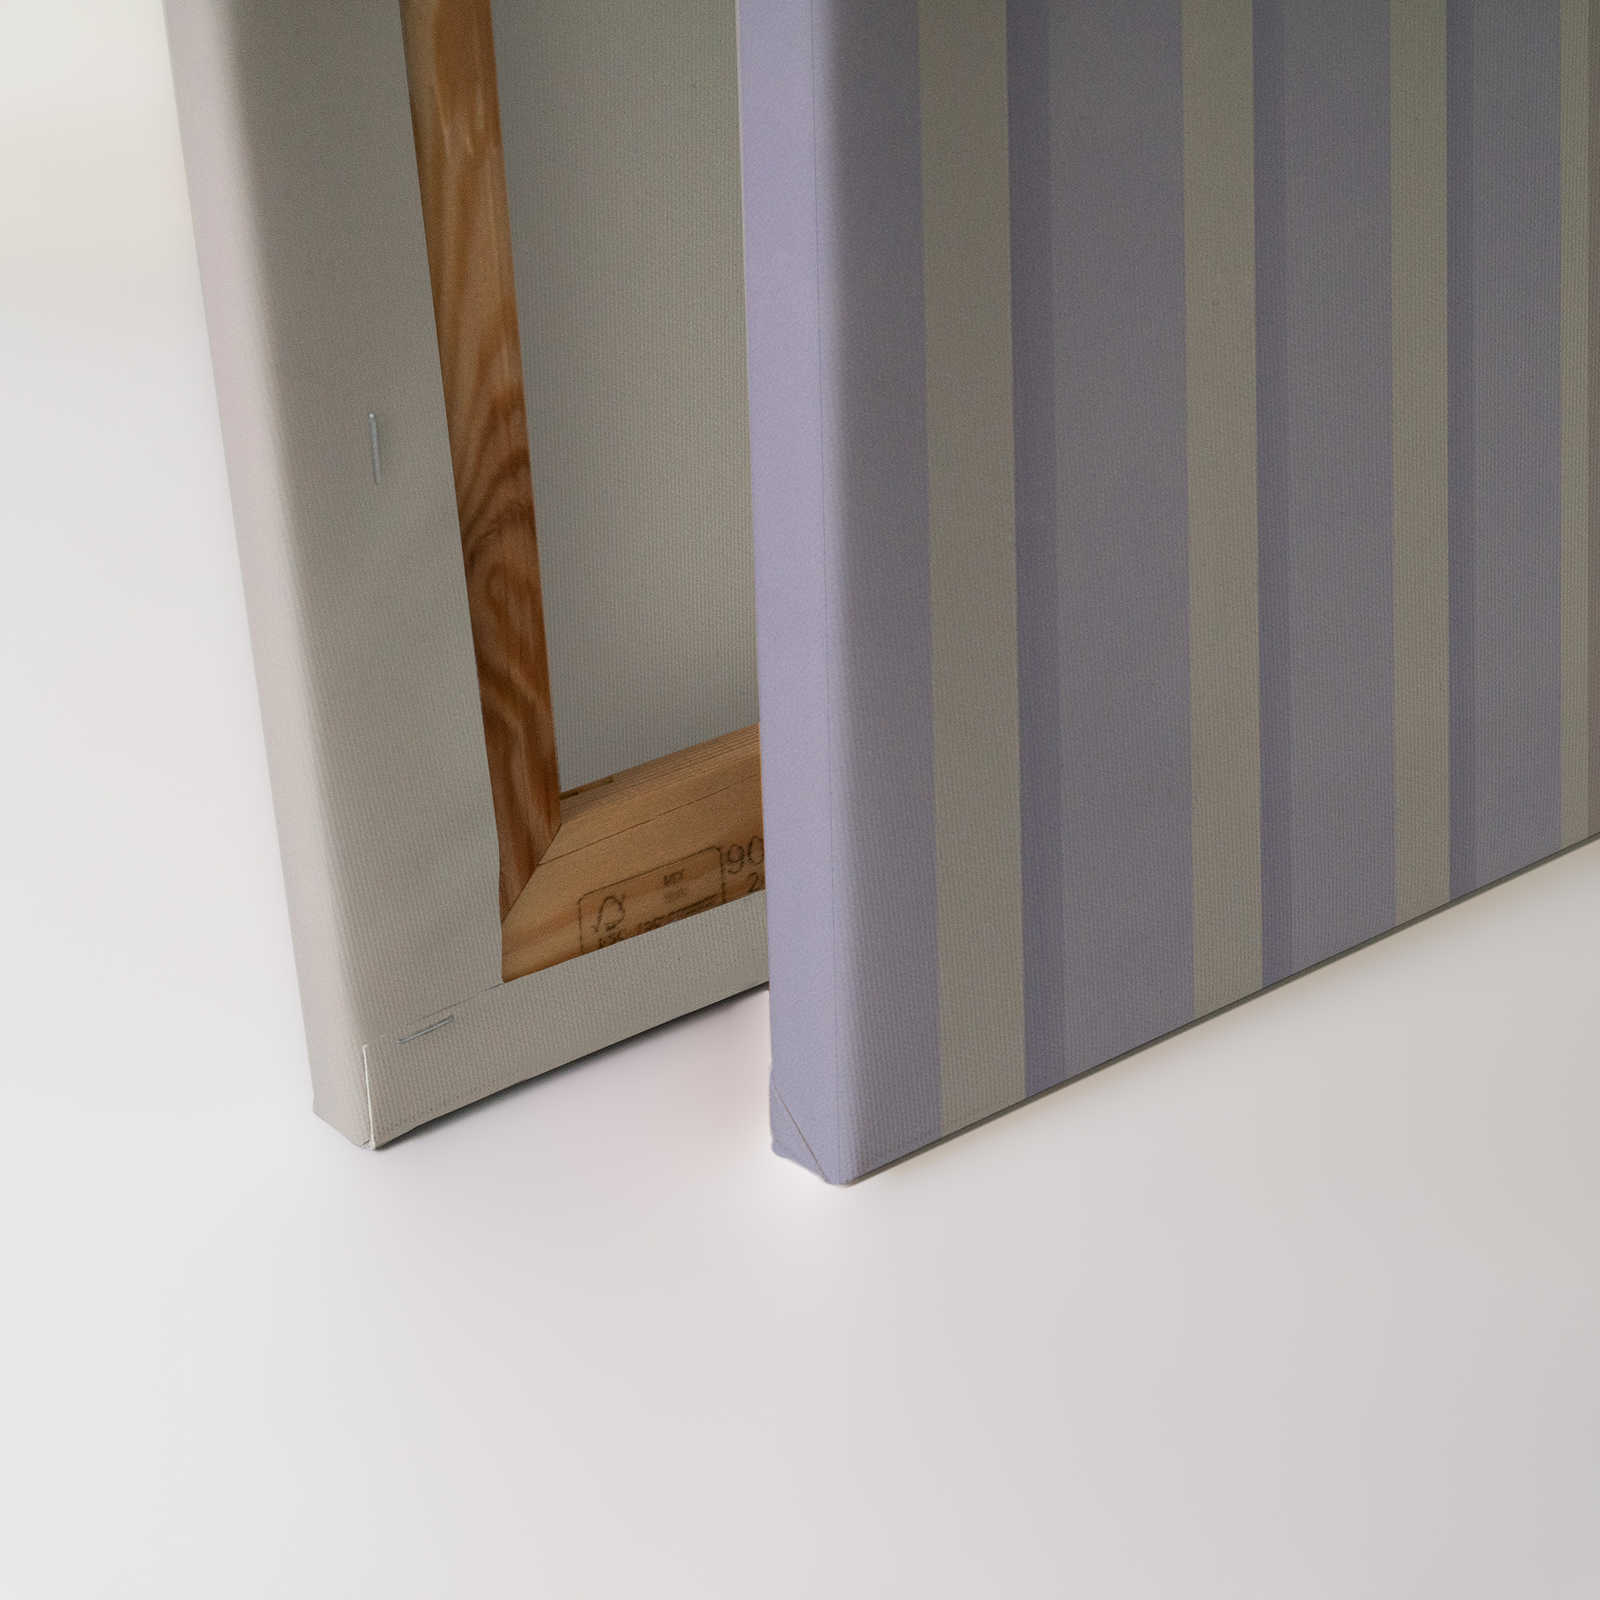             Illusion Room 1 - Canvas schilderij 3D Stripe Design in Purple & Grey - 1.20 m x 0.80 m
        